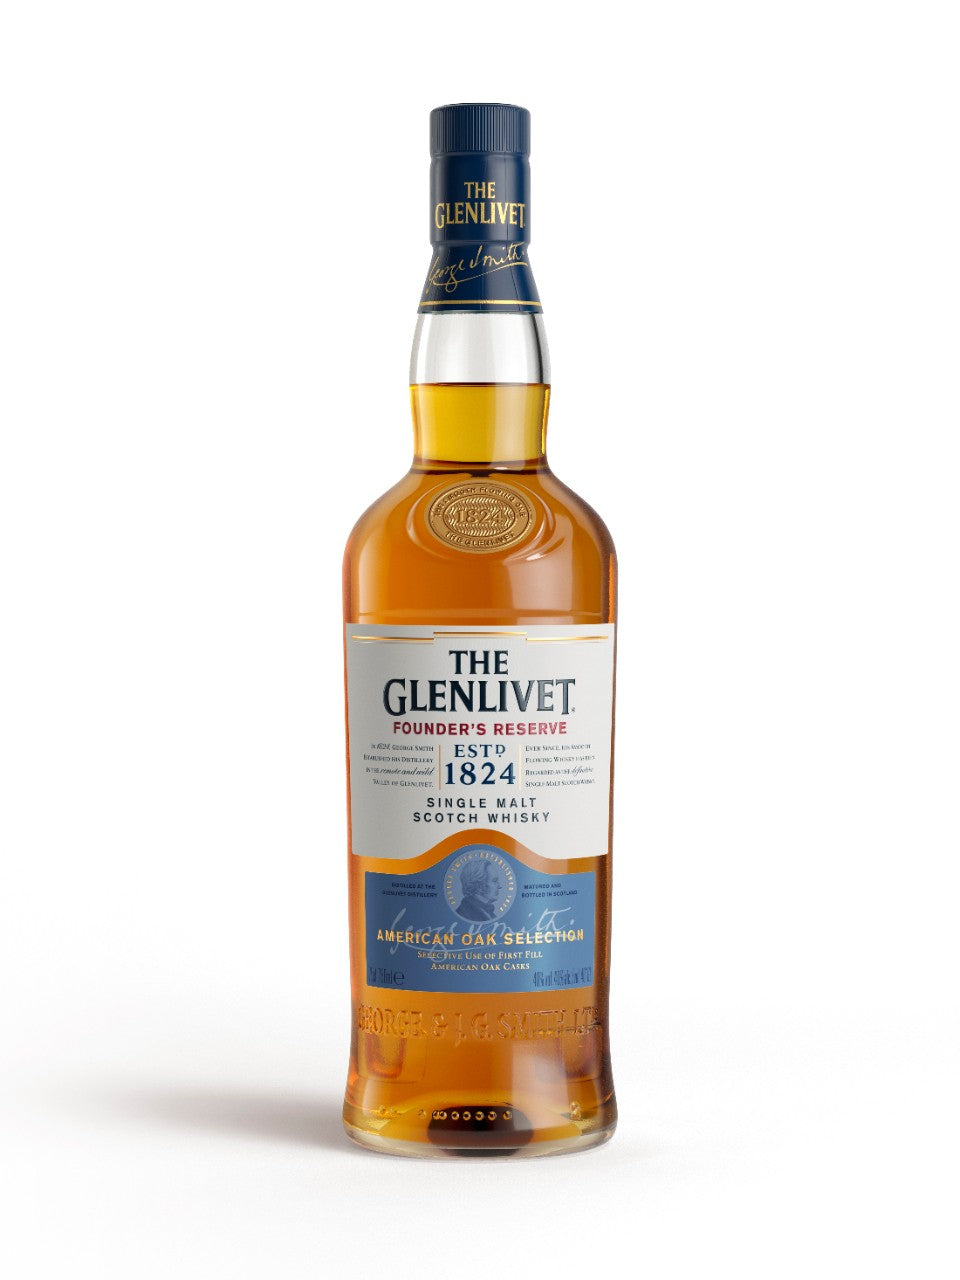 The Glenlivet Founder's Reserve Scotch Whisky 750 mL bottle